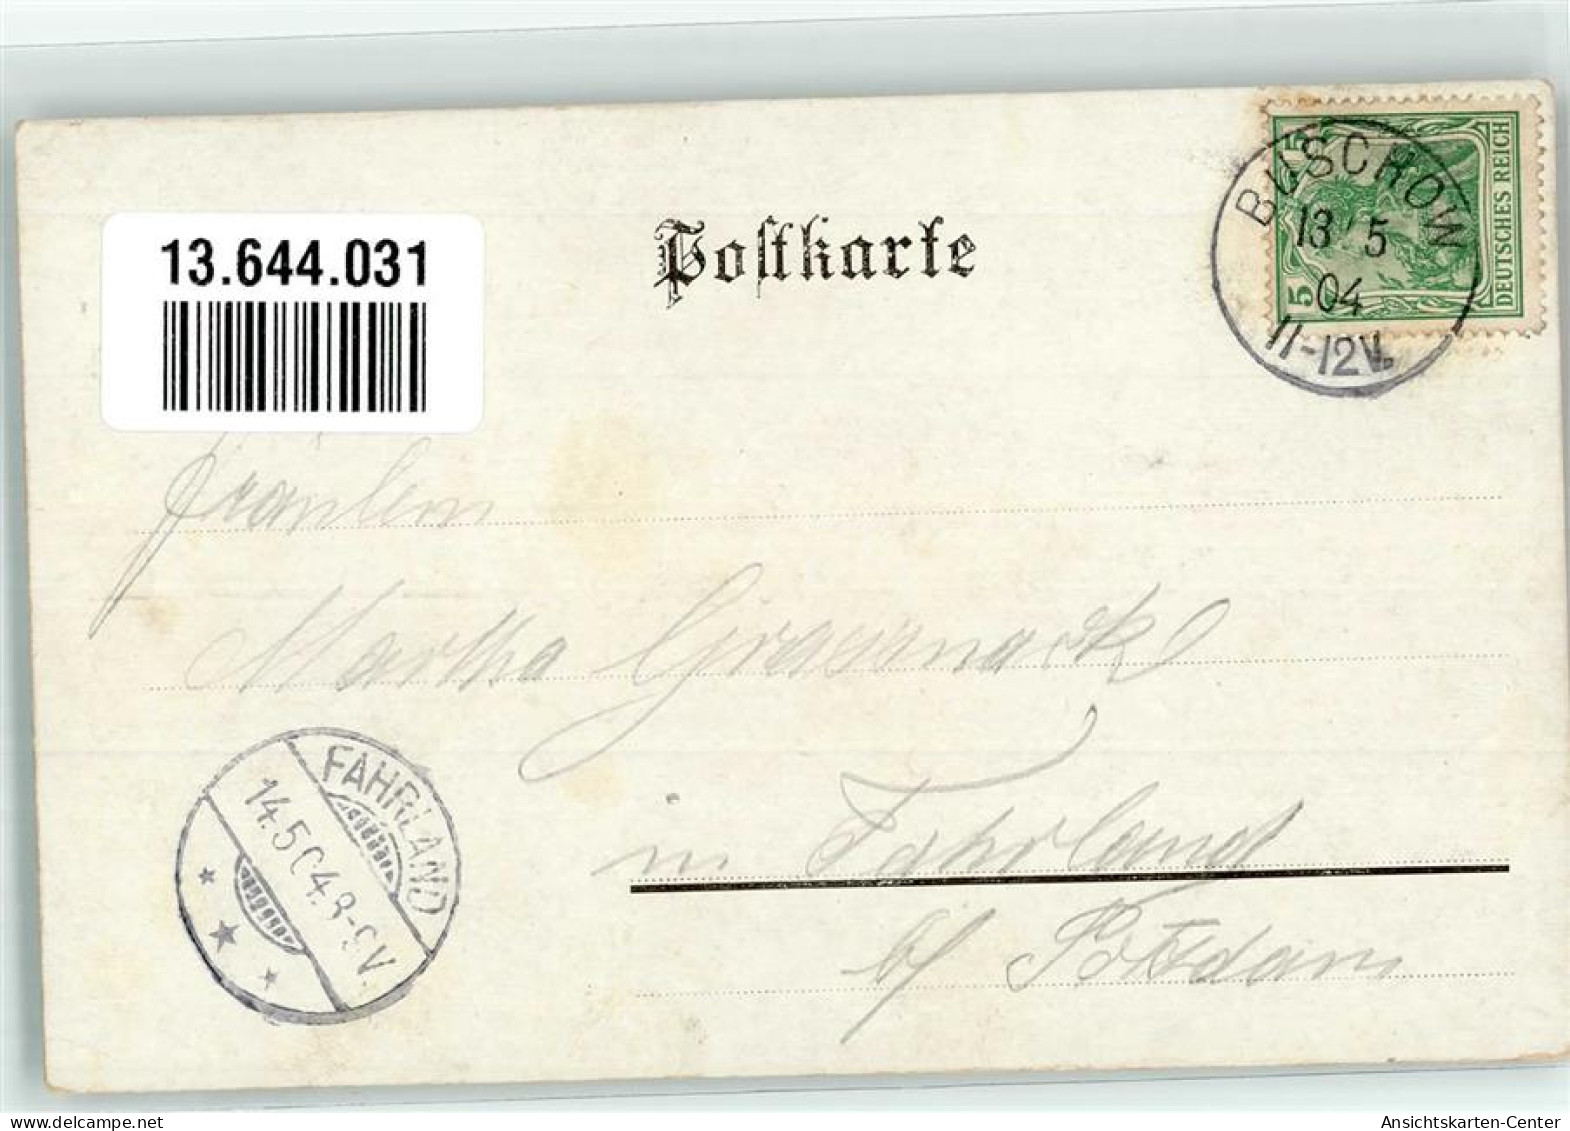 13644031 - Damme B Rathenow - Nennhausen